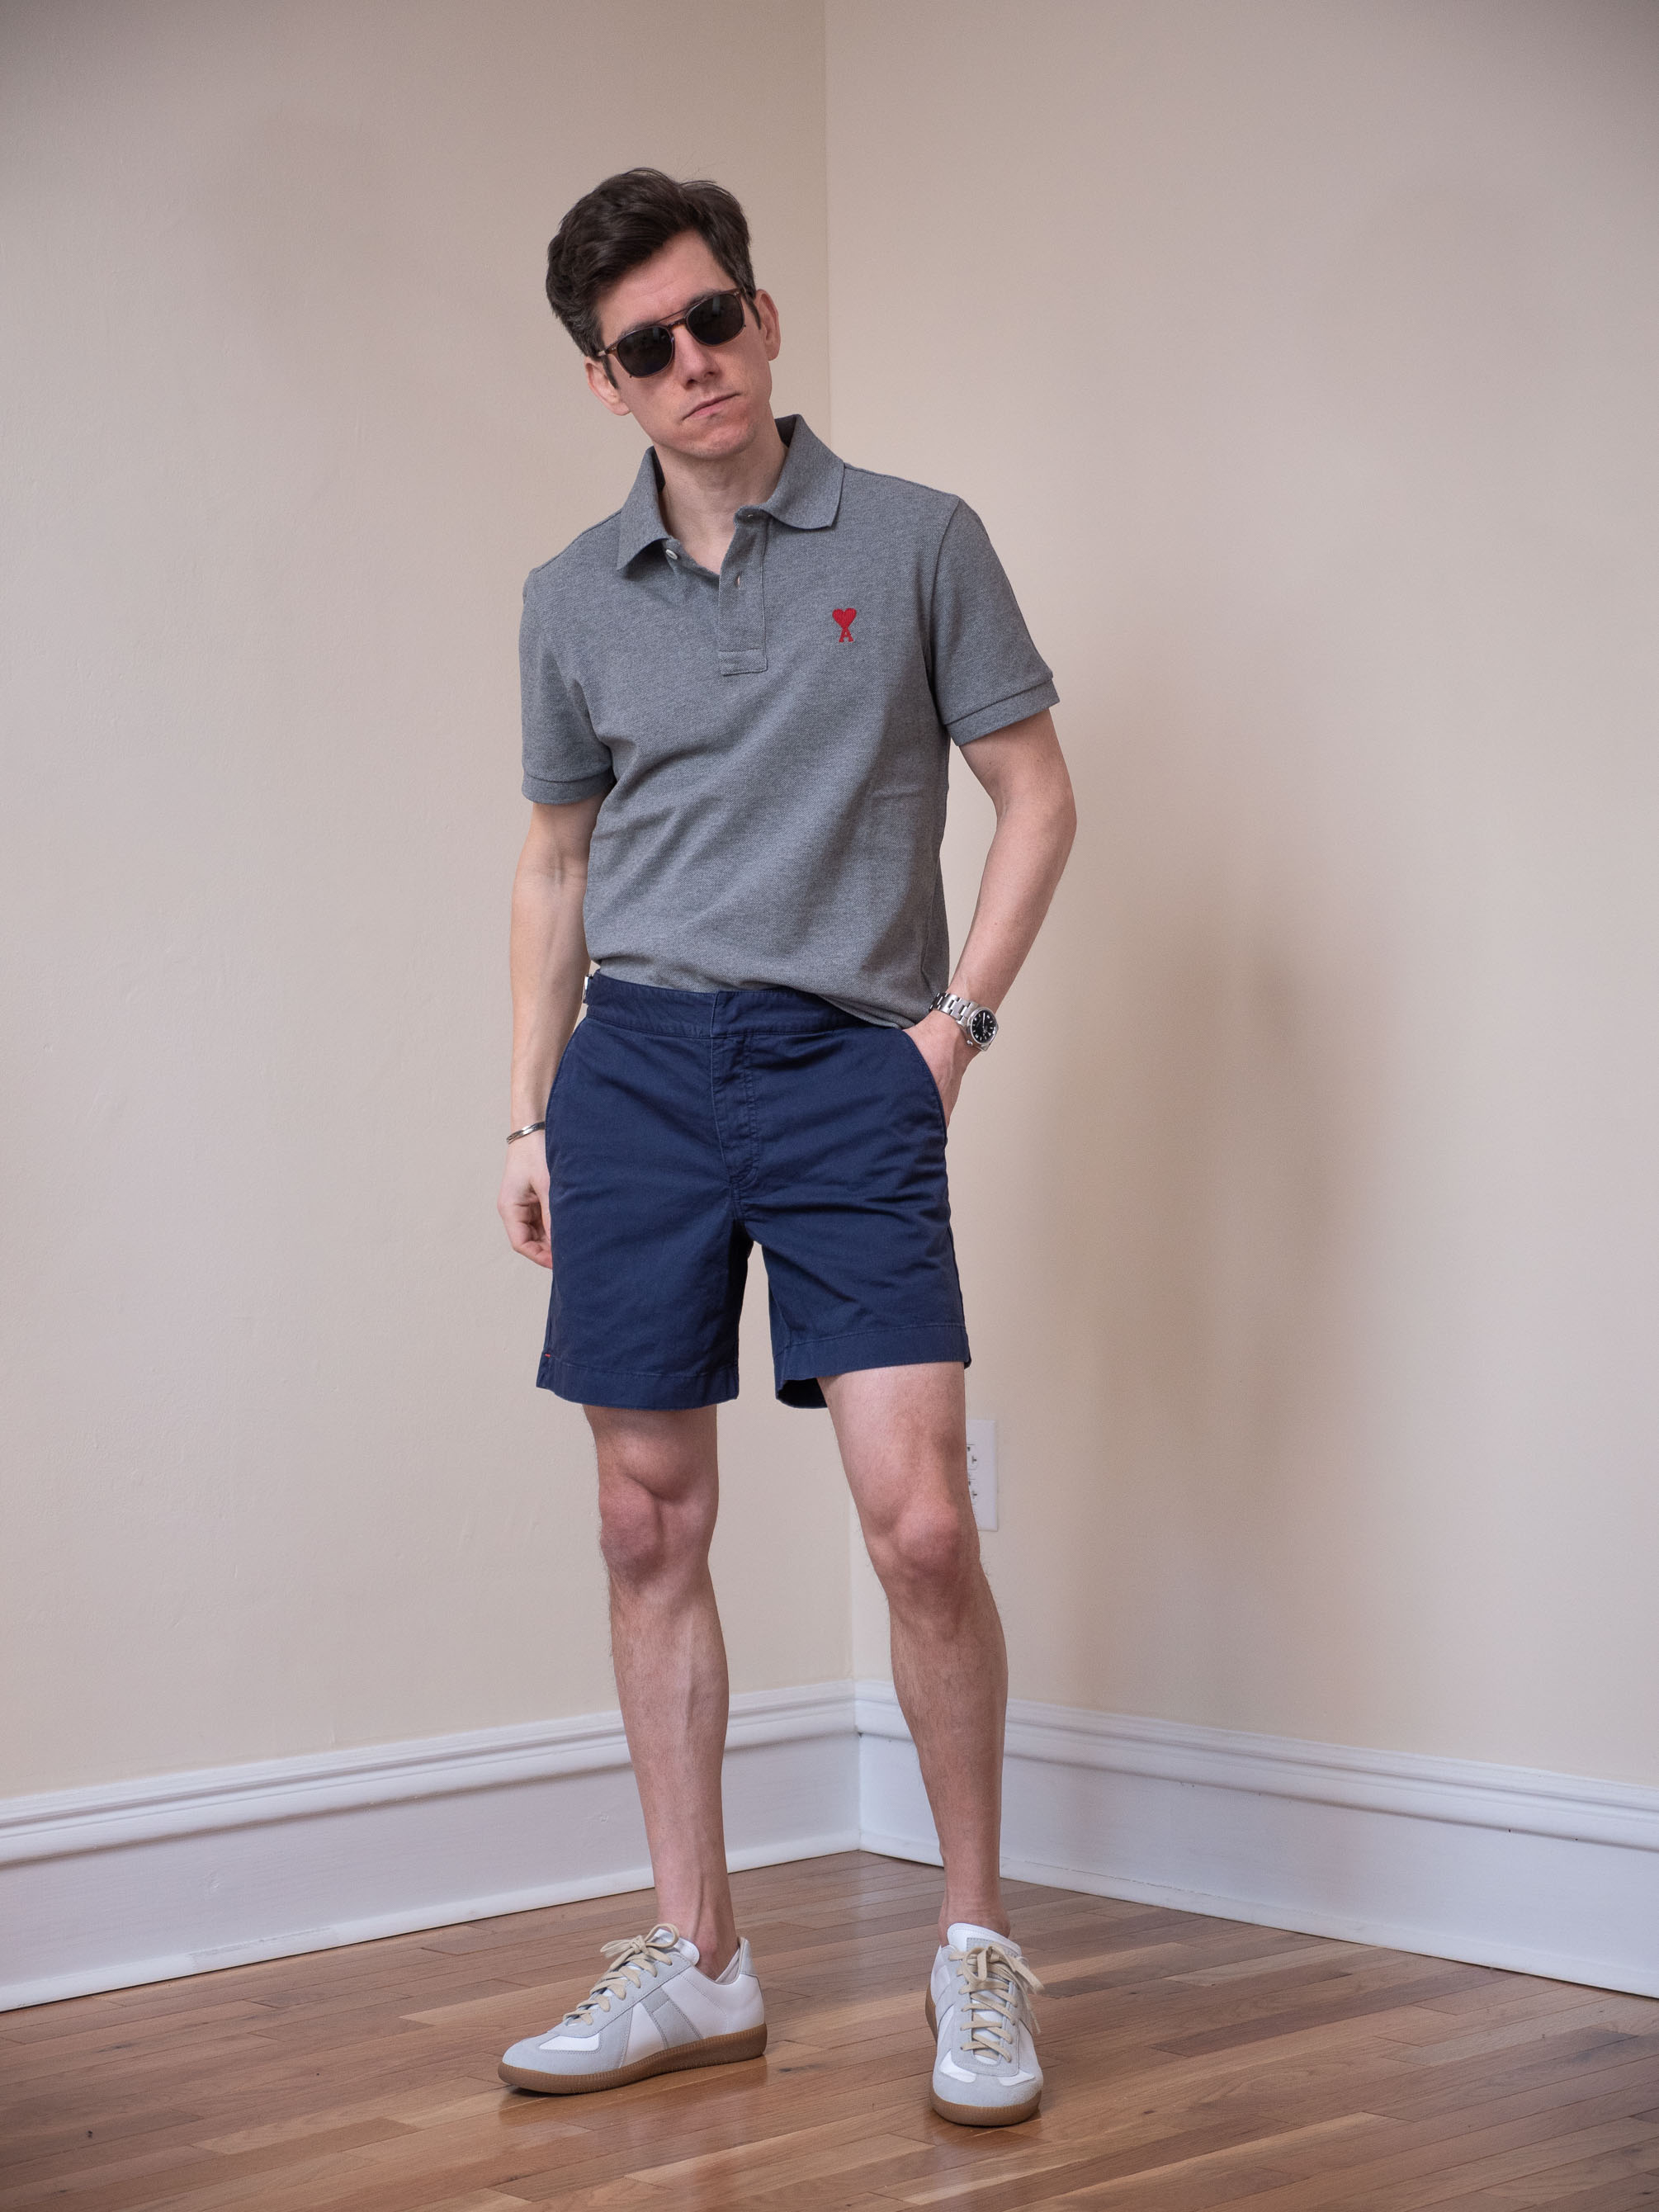 How Men's Shorts Should Fit + Shorts Length Guide